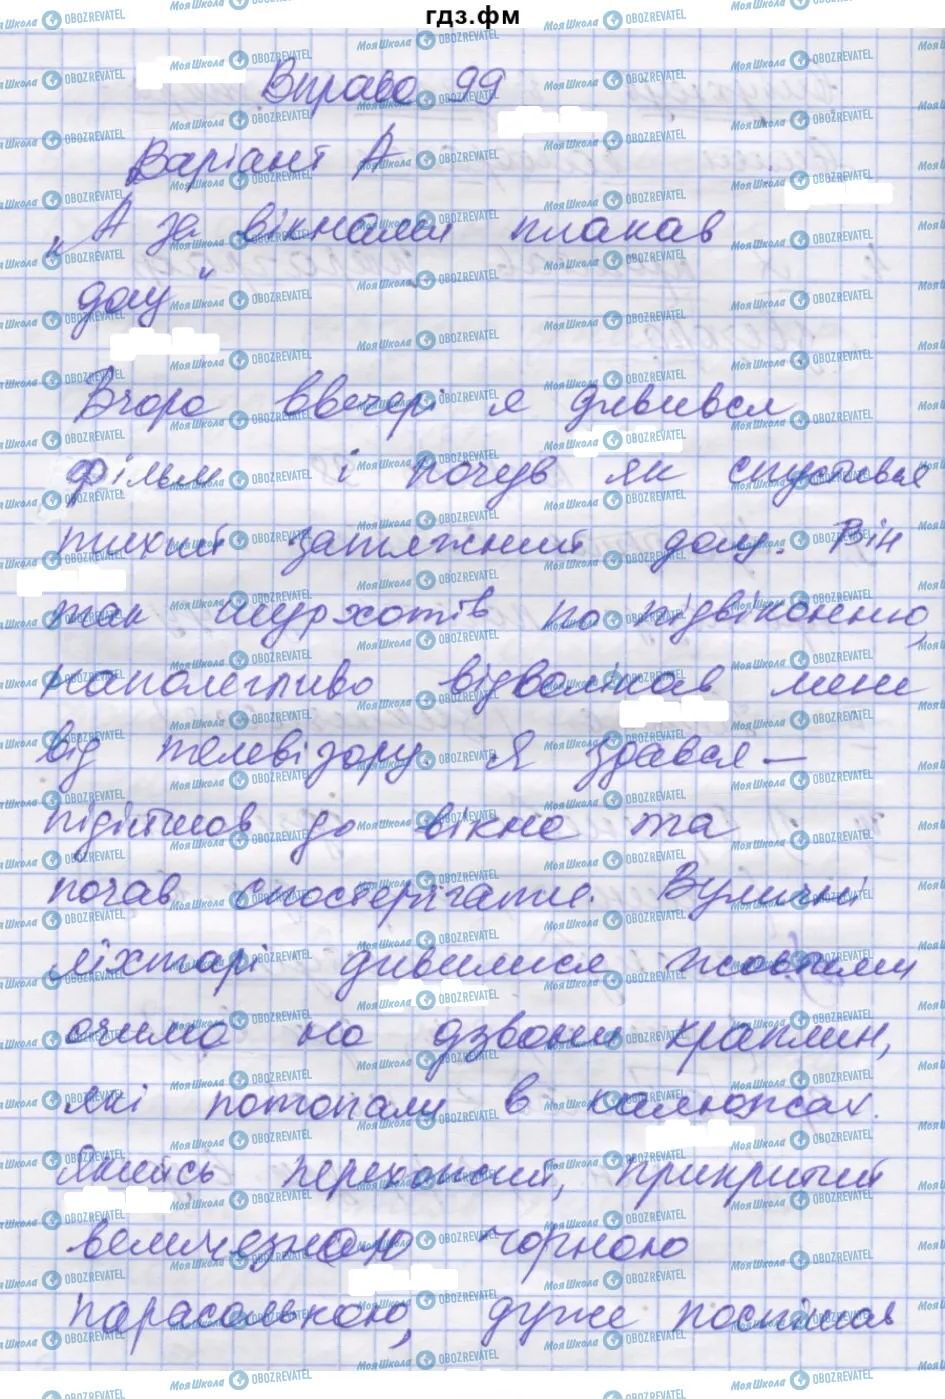 ГДЗ Укр мова 7 класс страница 99